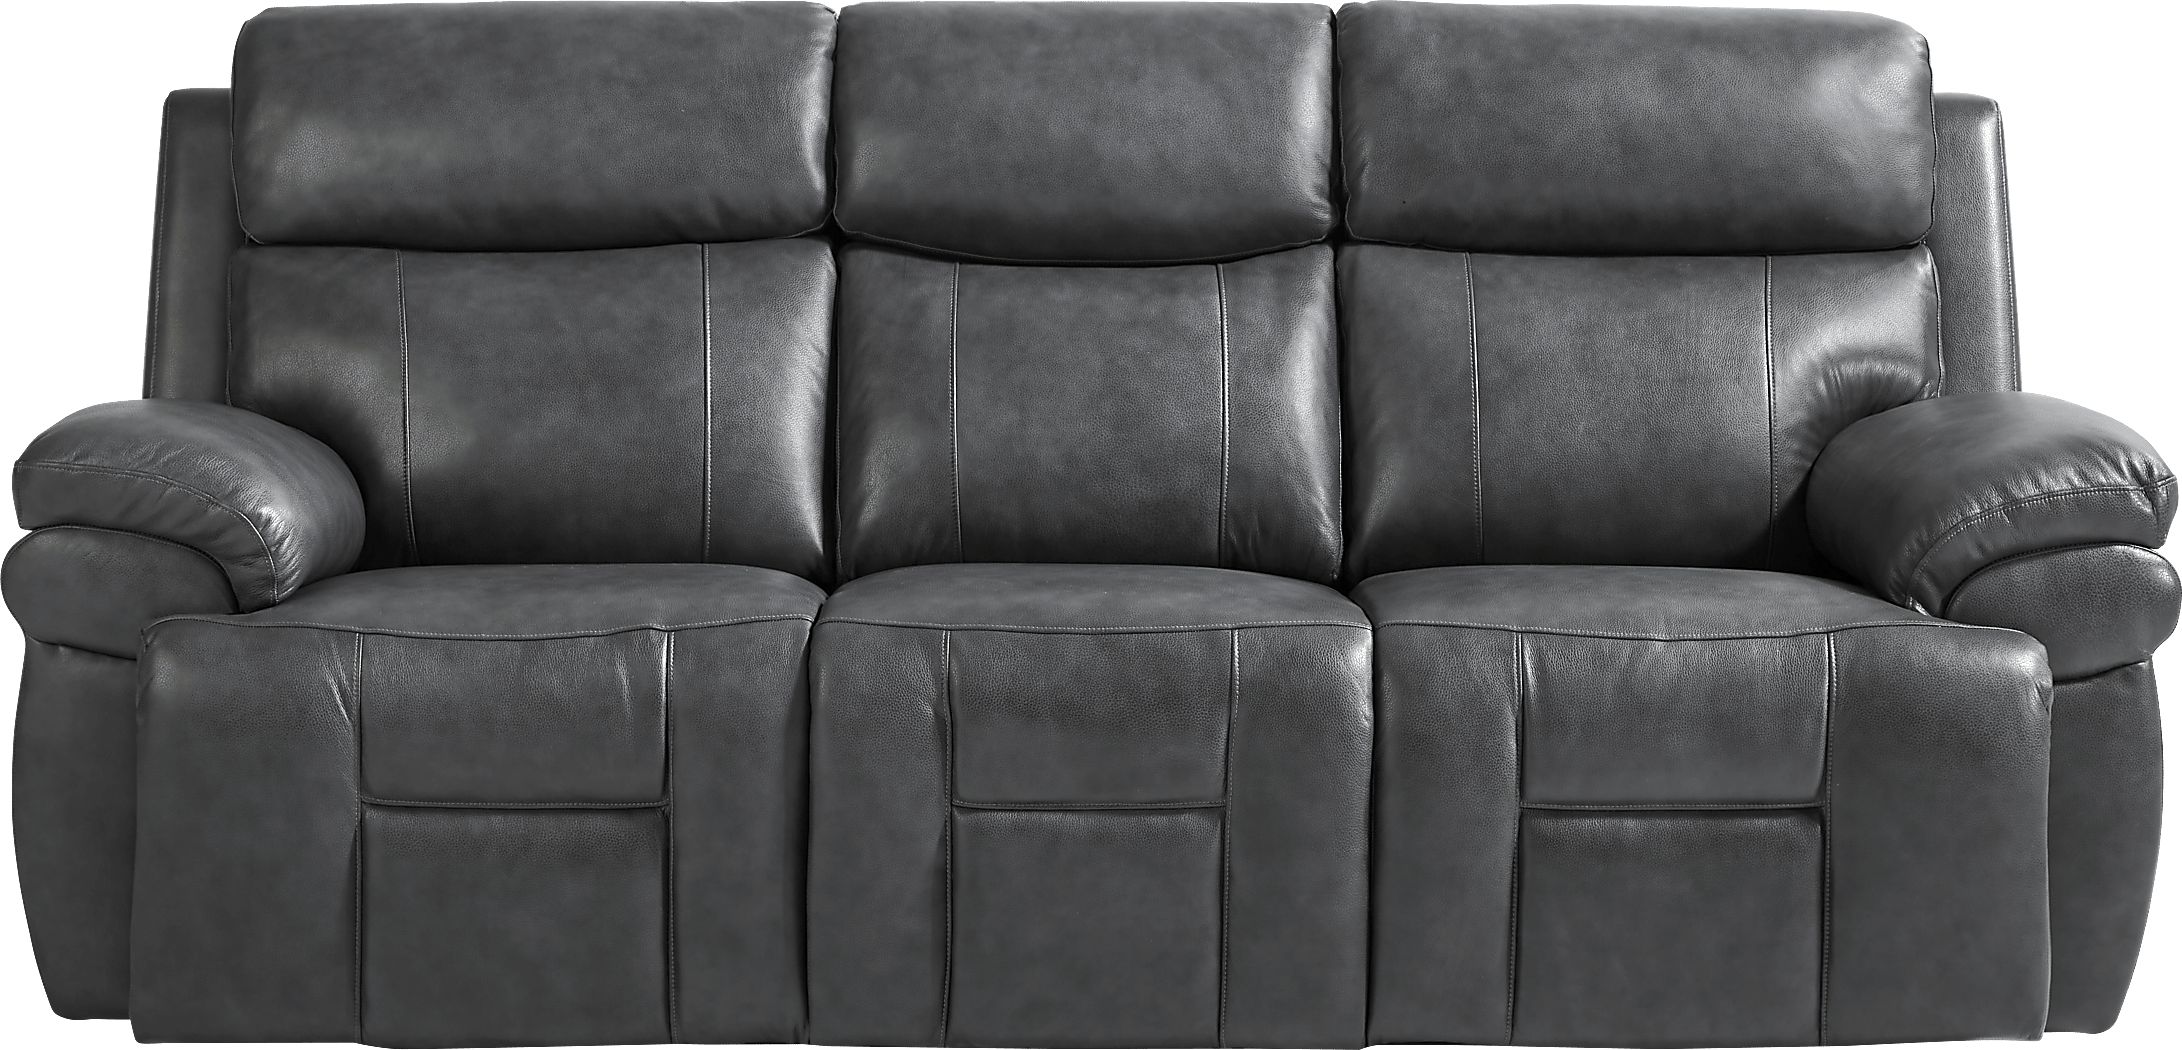 leather reclining massage sofa